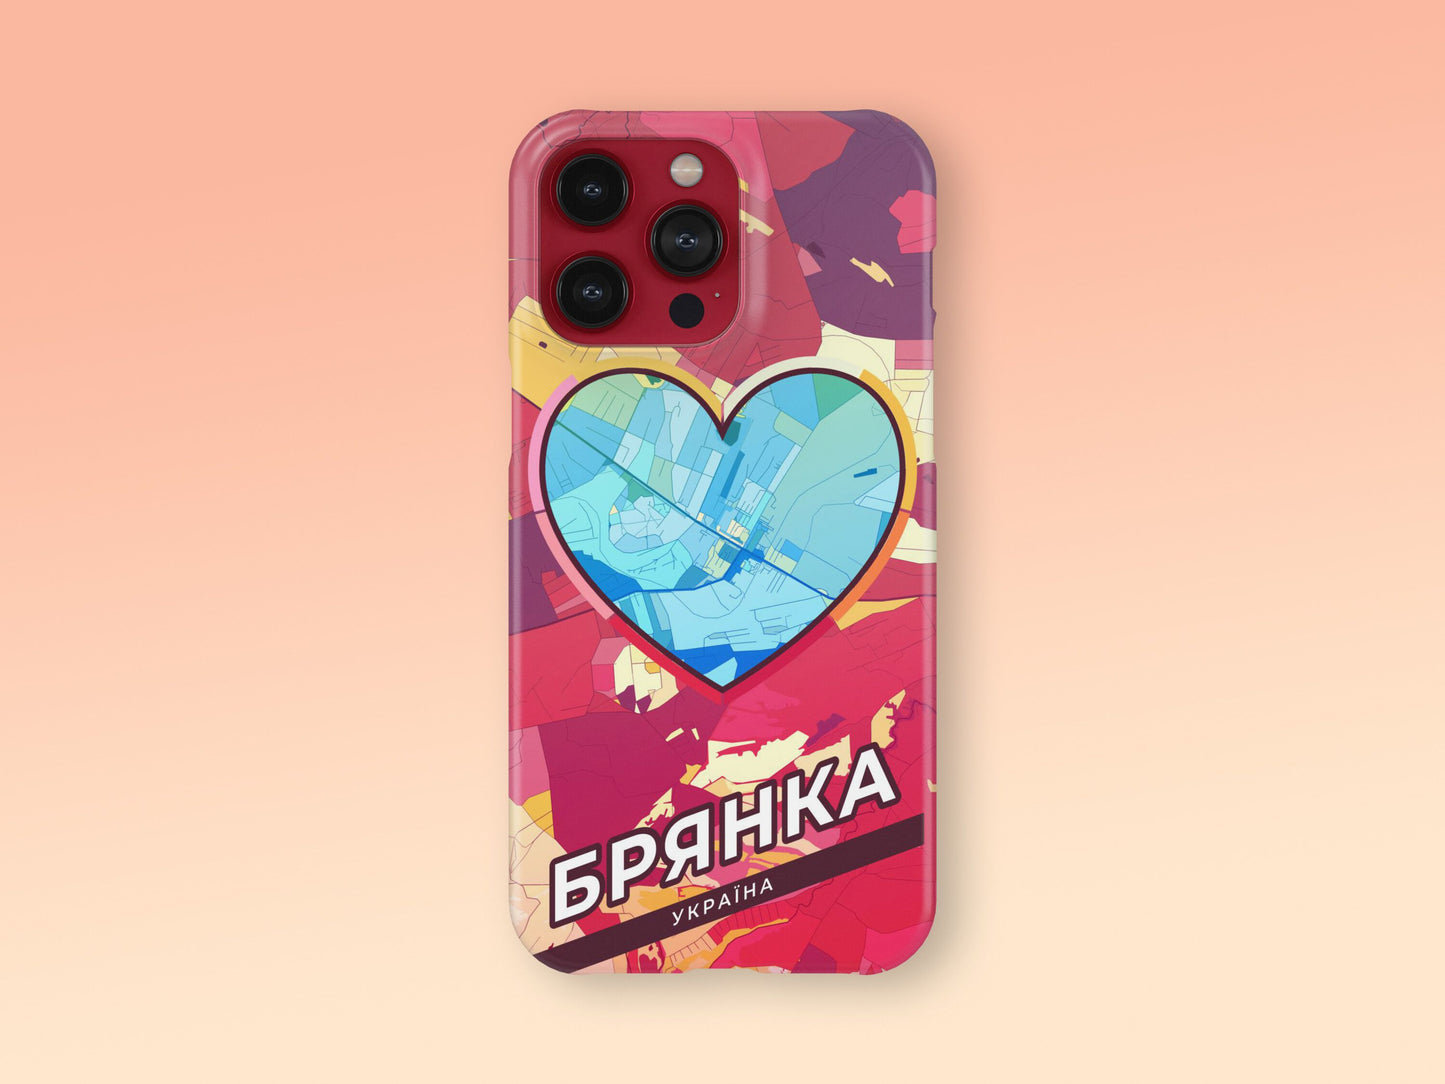 Brianka Ukraine slim phone case with colorful icon. Birthday, wedding or housewarming gift. Couple match cases. 2